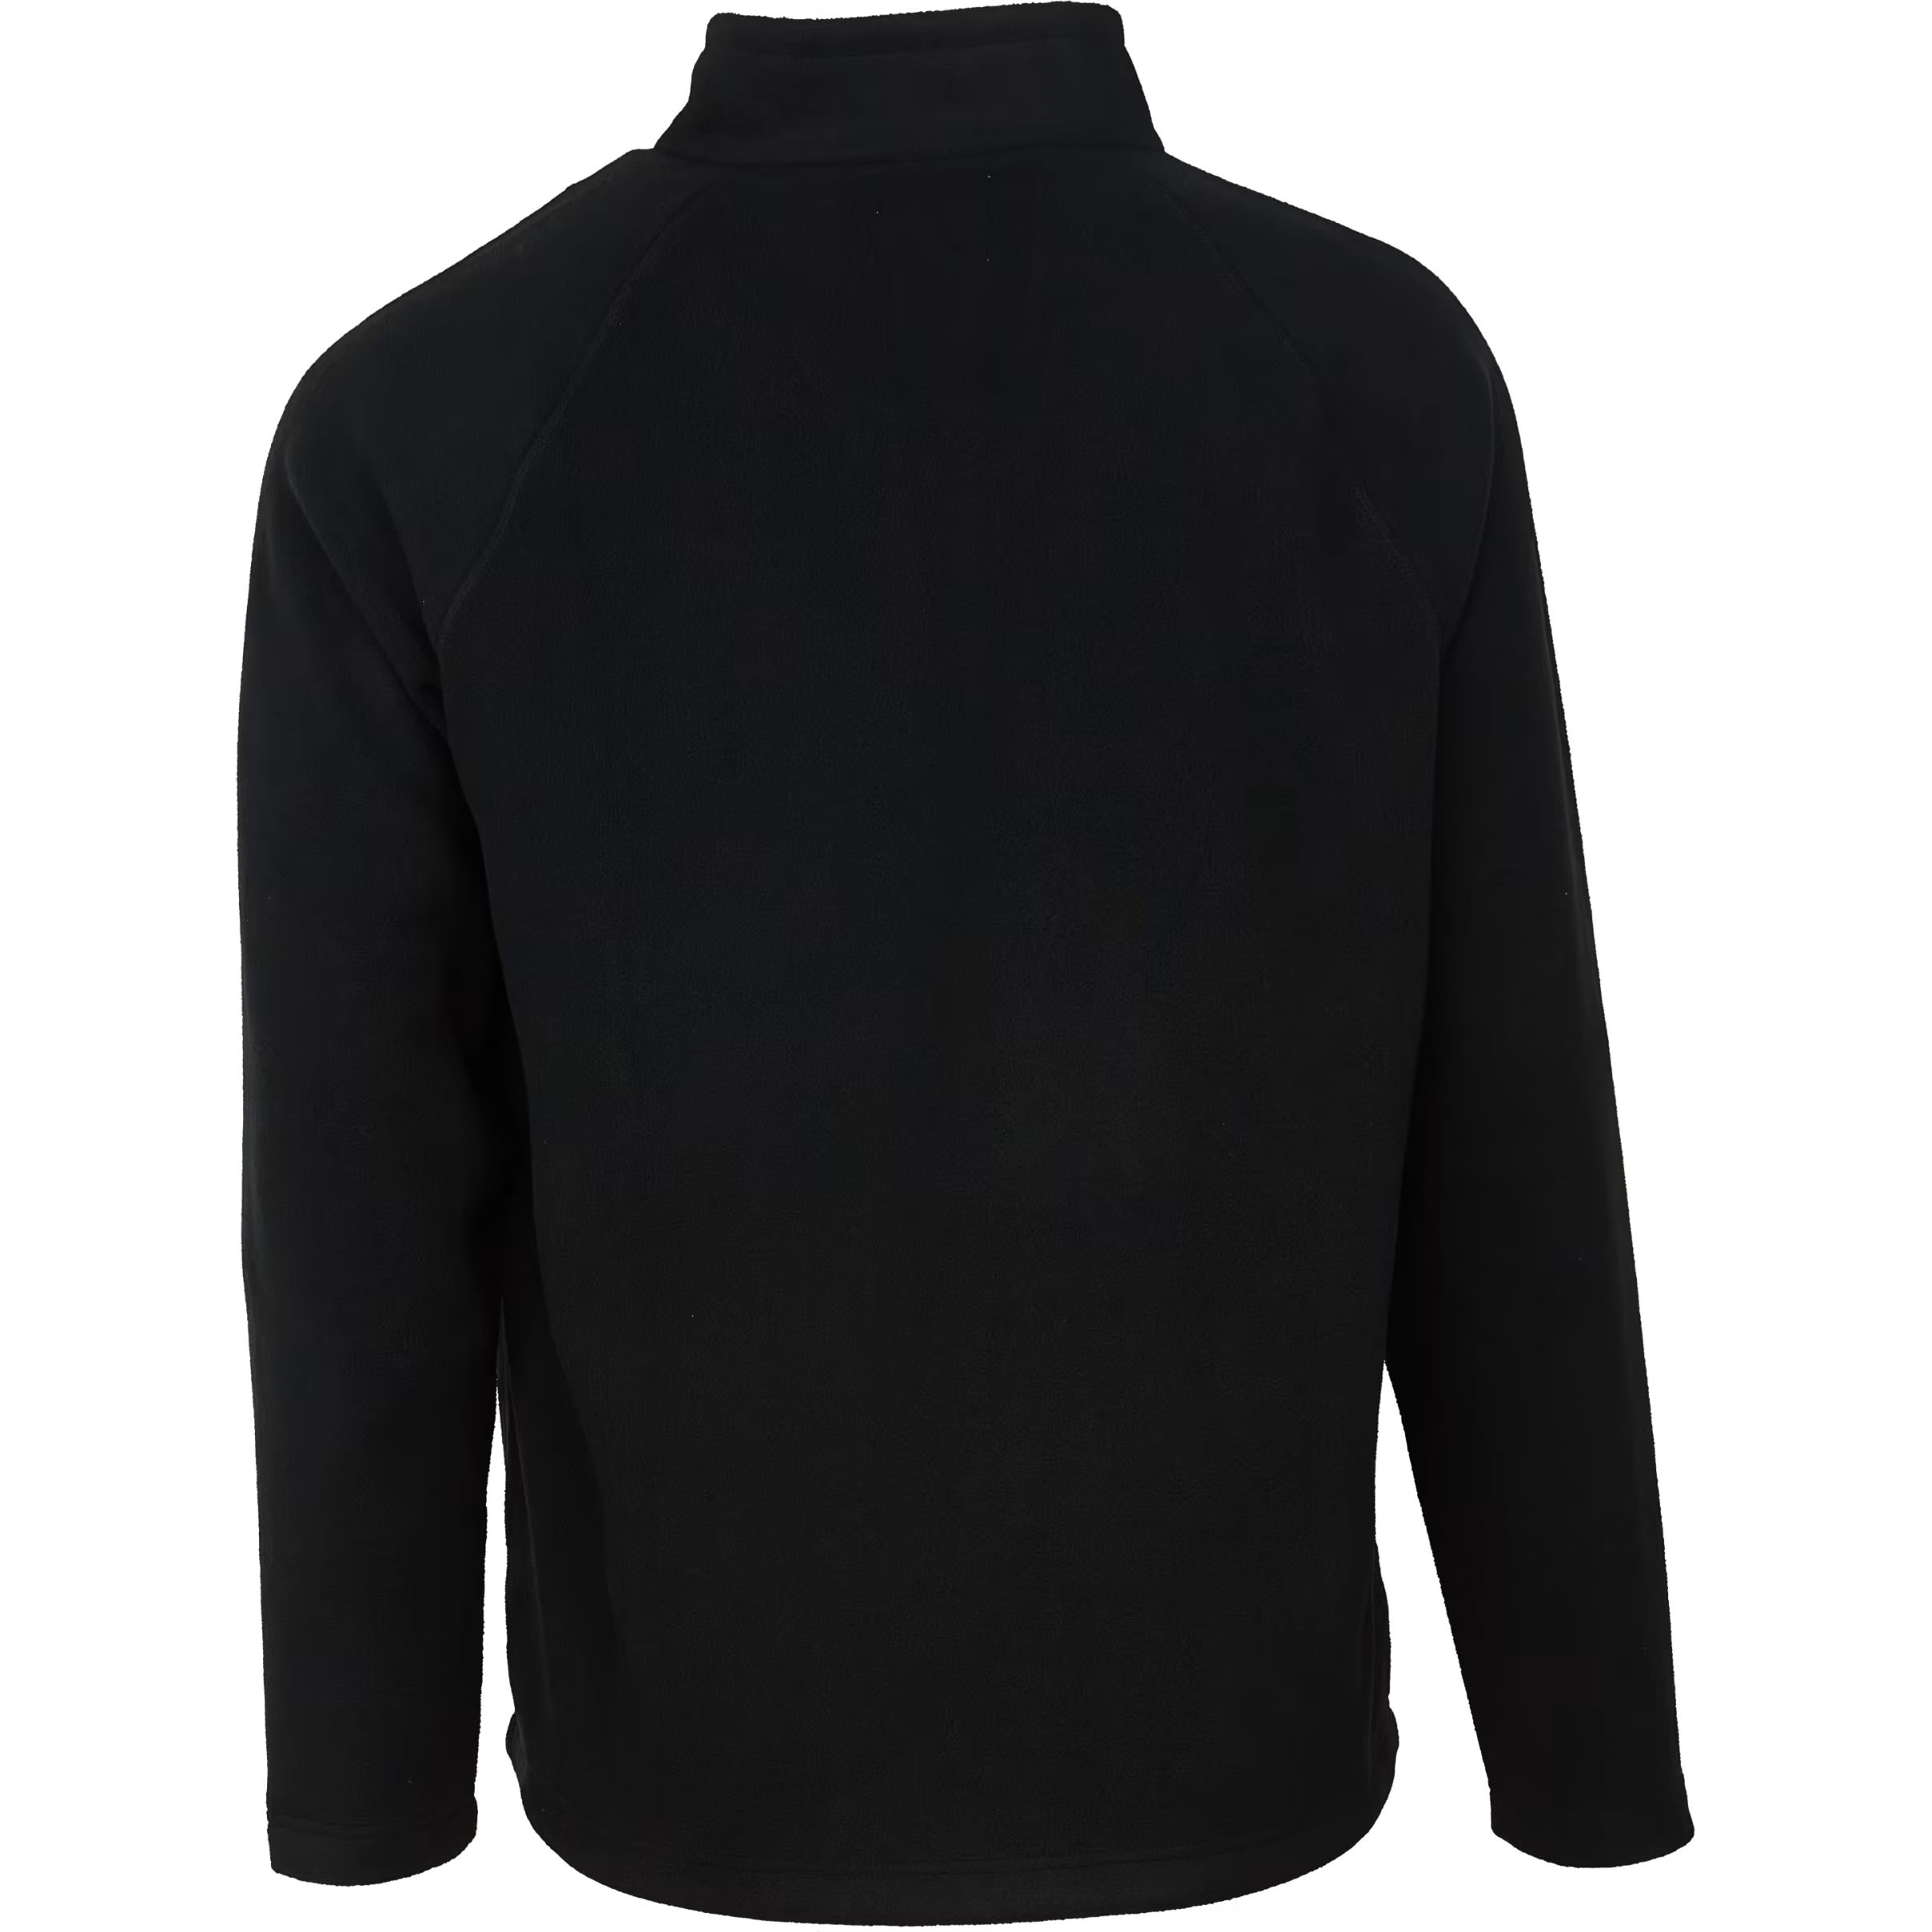 RedHead® Men’s Quarter-Zip Fleece Long-Sleeve Pullover | Cabela's Canada